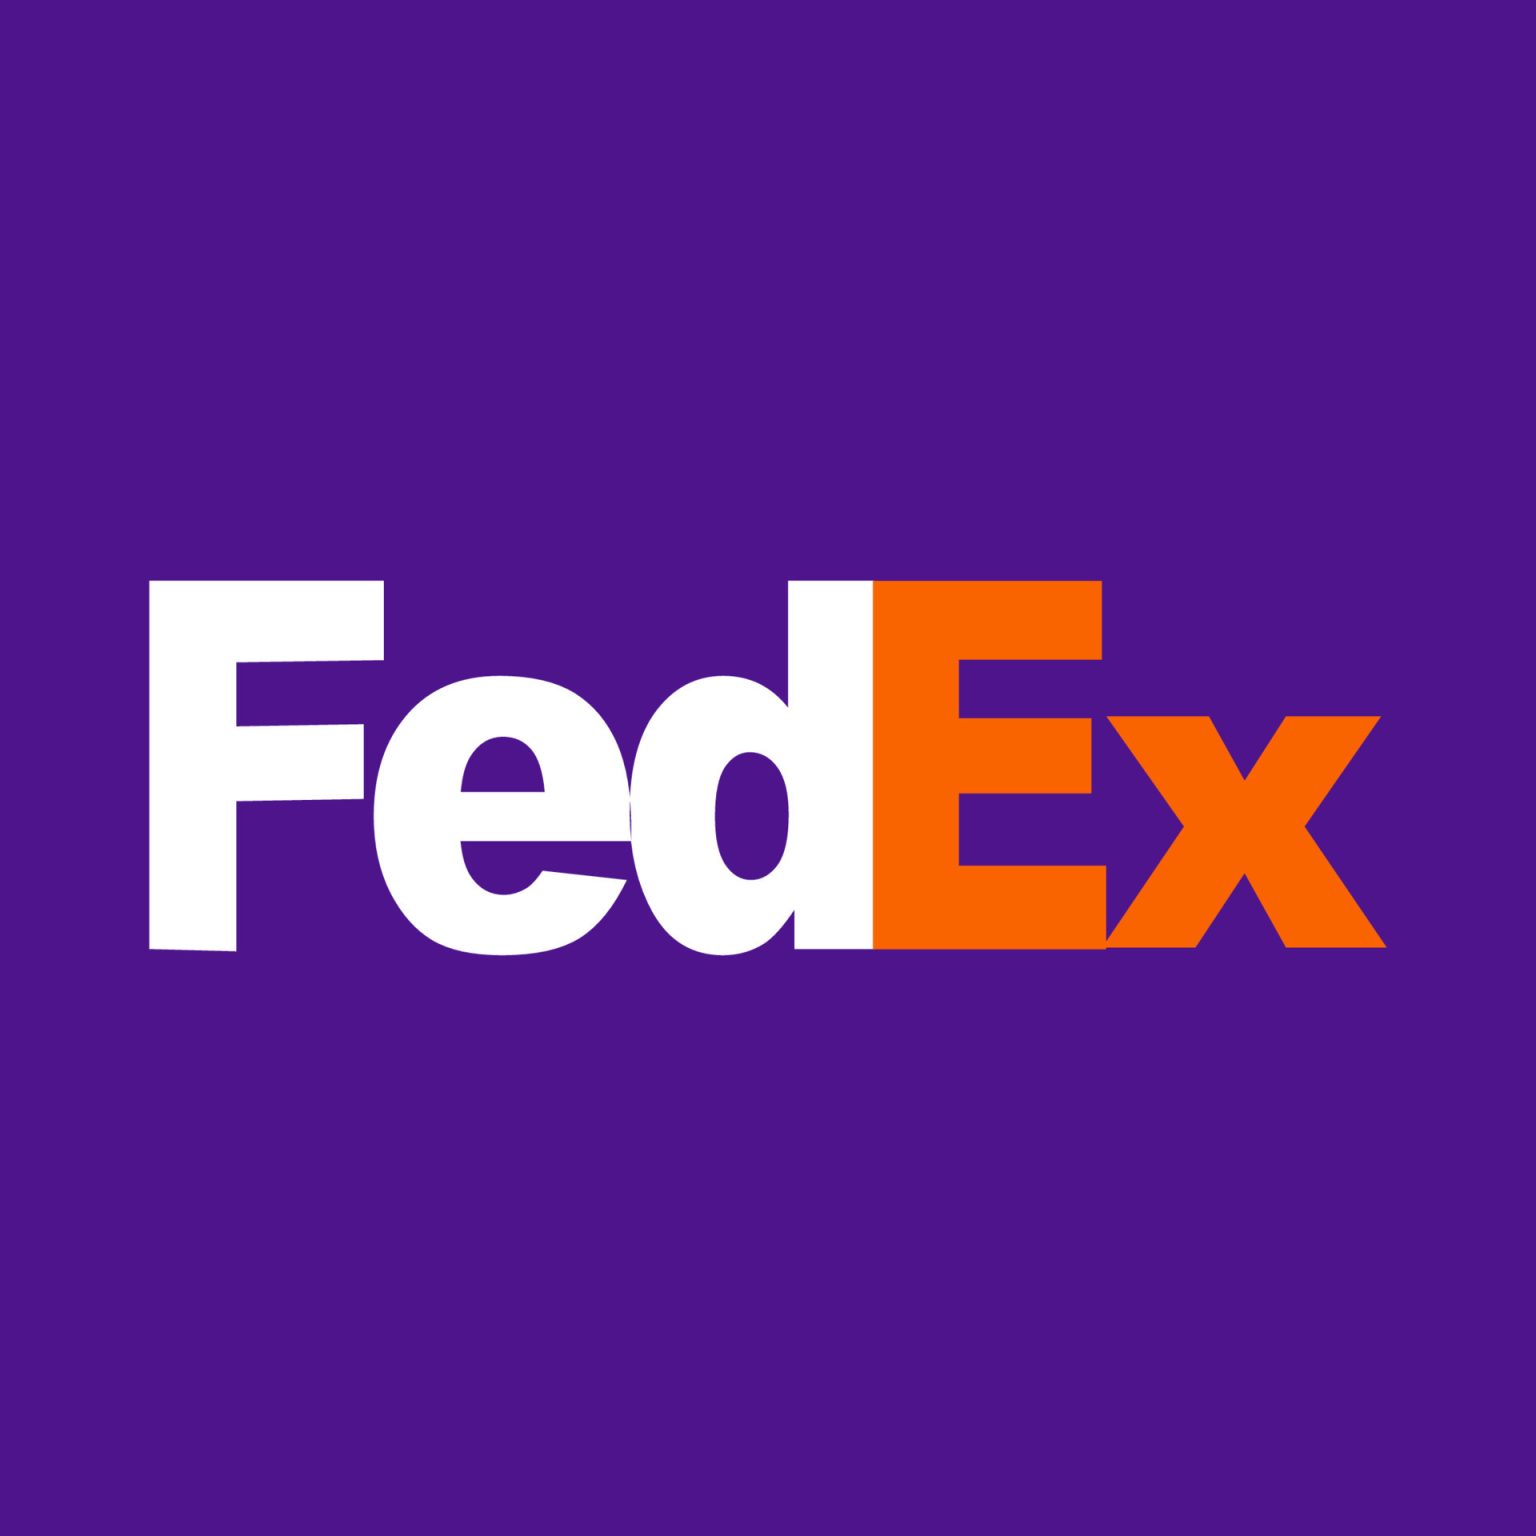 fedex-logo-free-download-free-vector-1